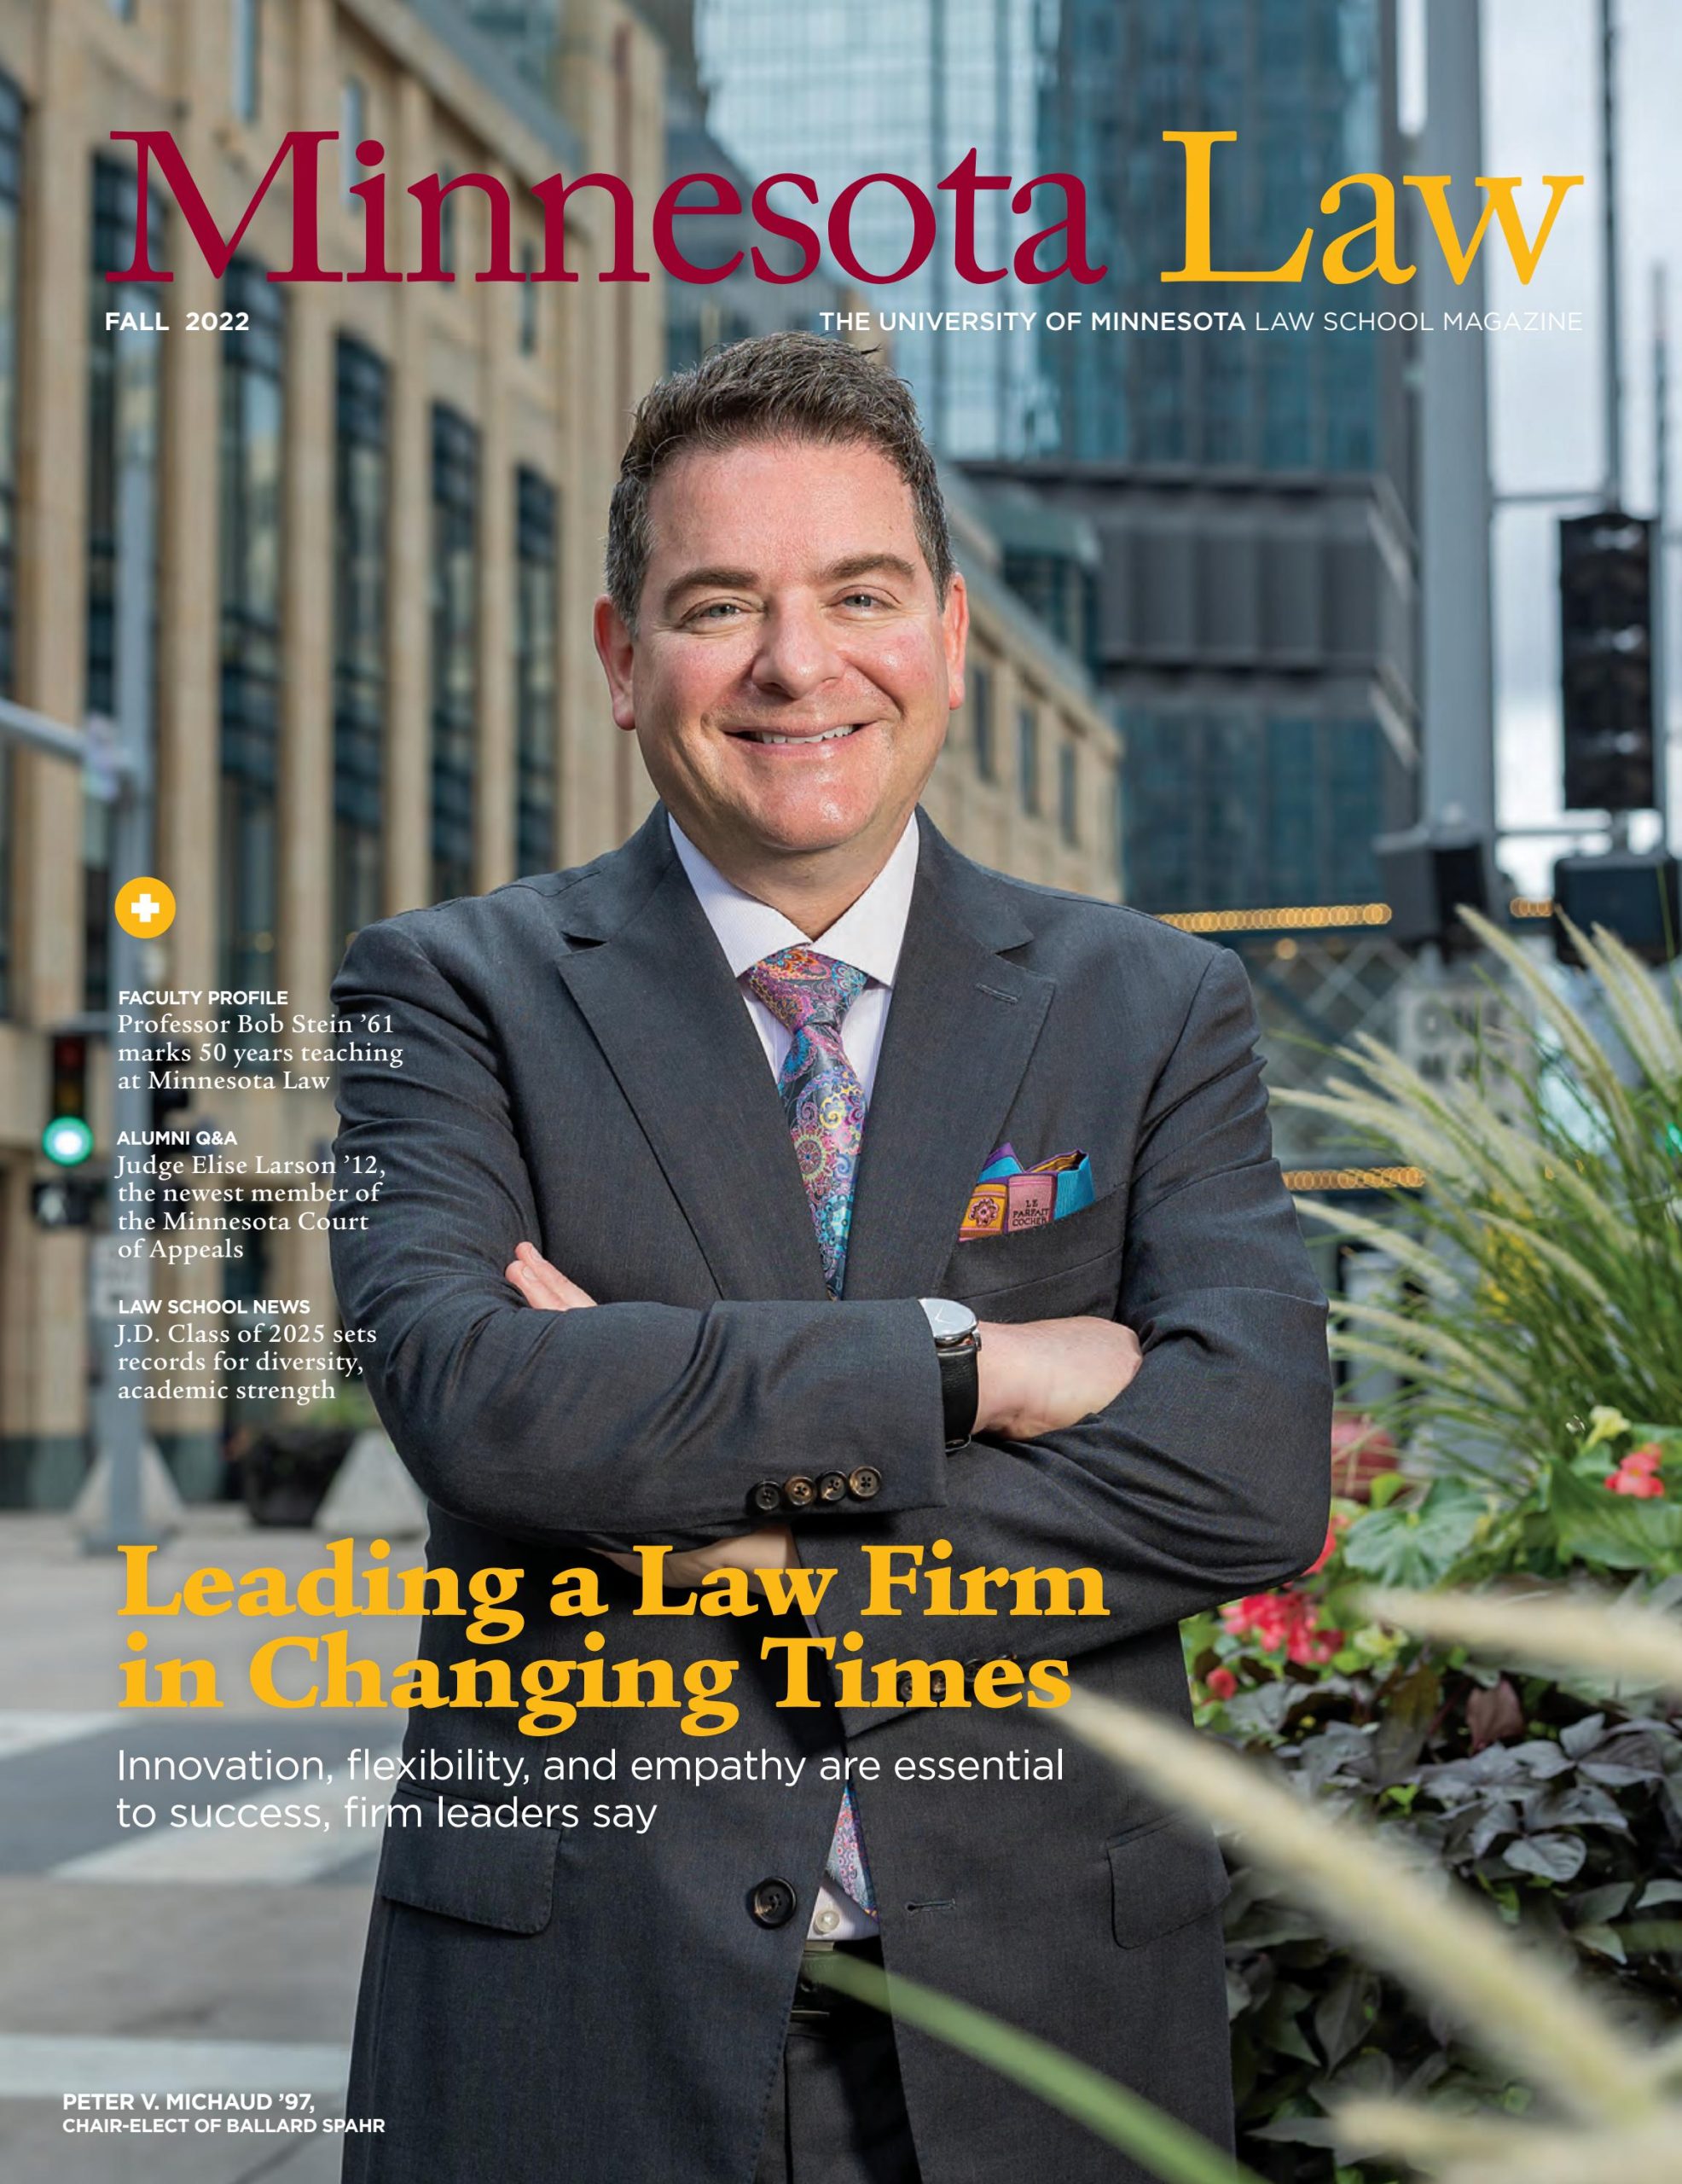 Brad Hendricks Law Firm Reviews